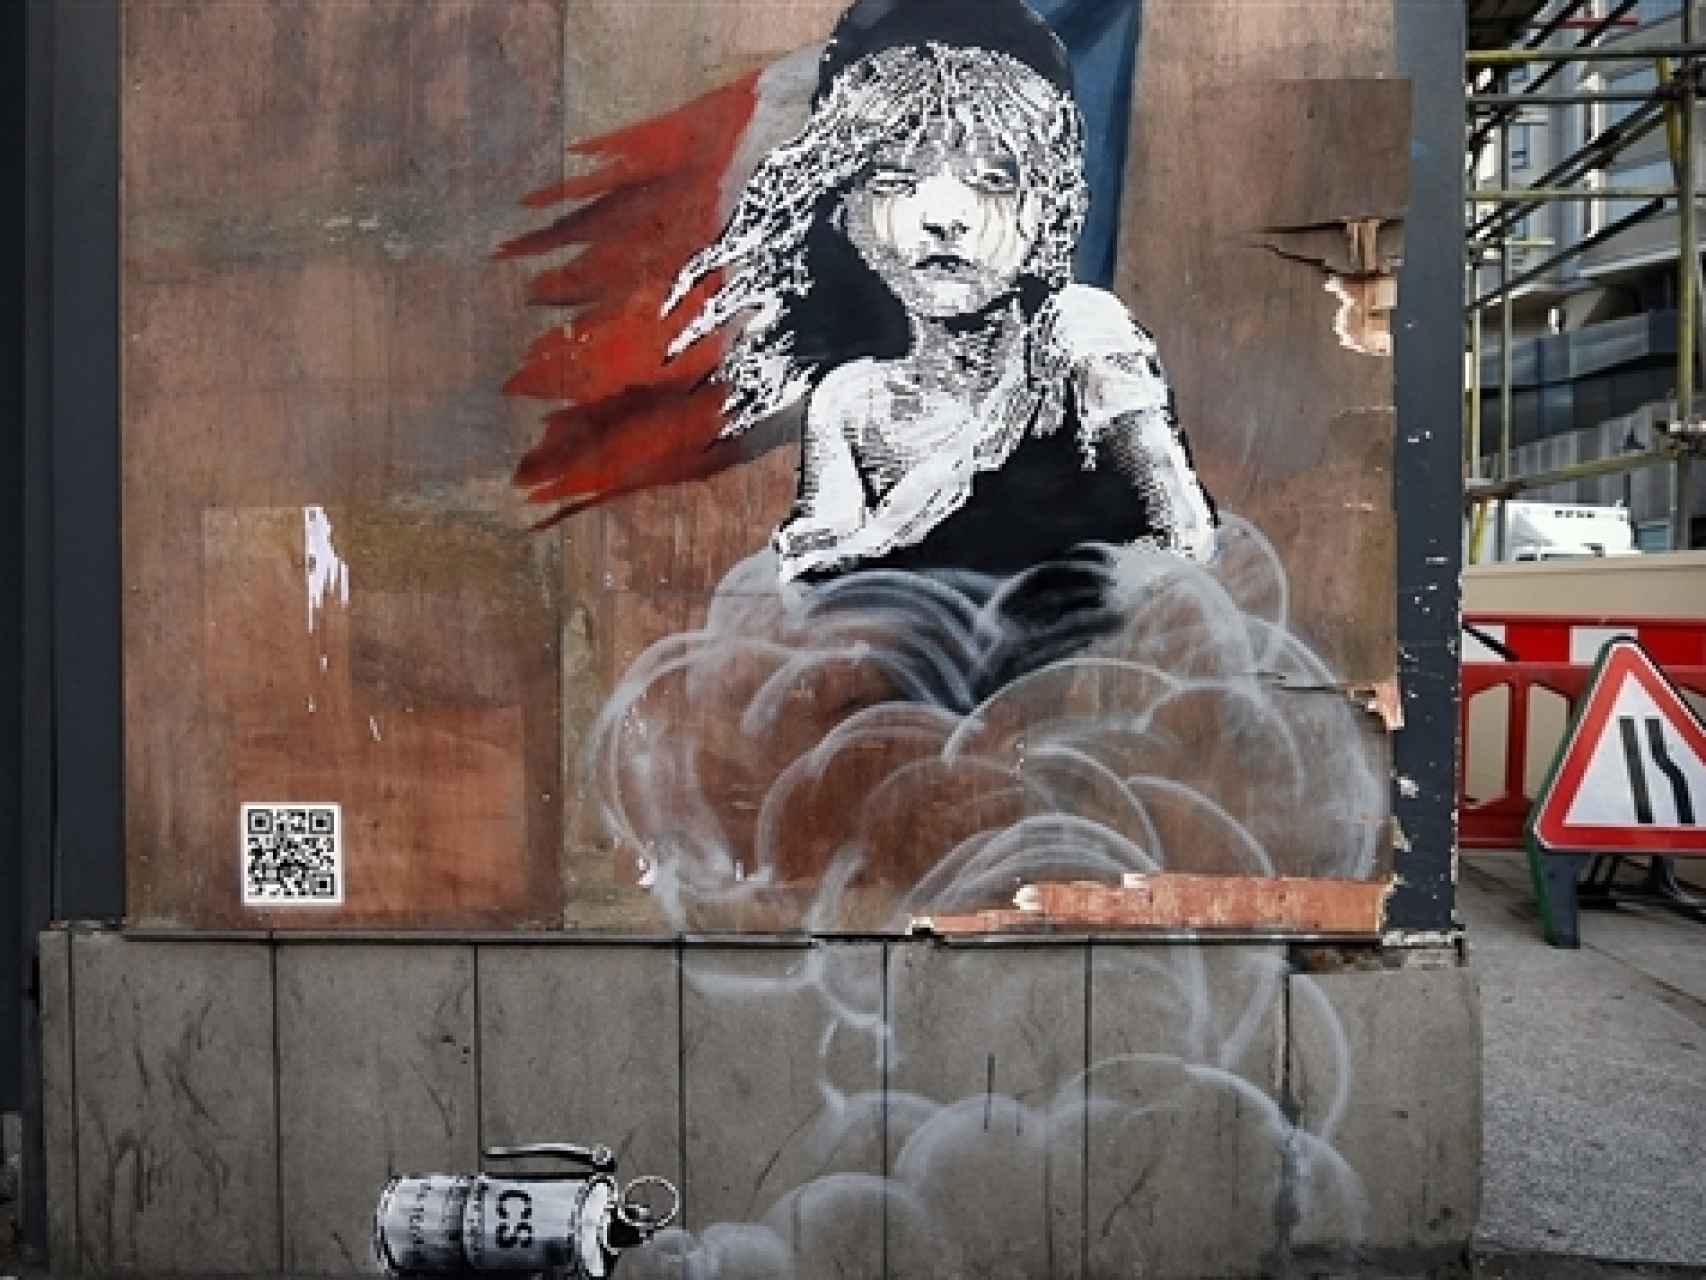 Obra de Banksy que reproduce la mítica niña de la obra Los miserables.